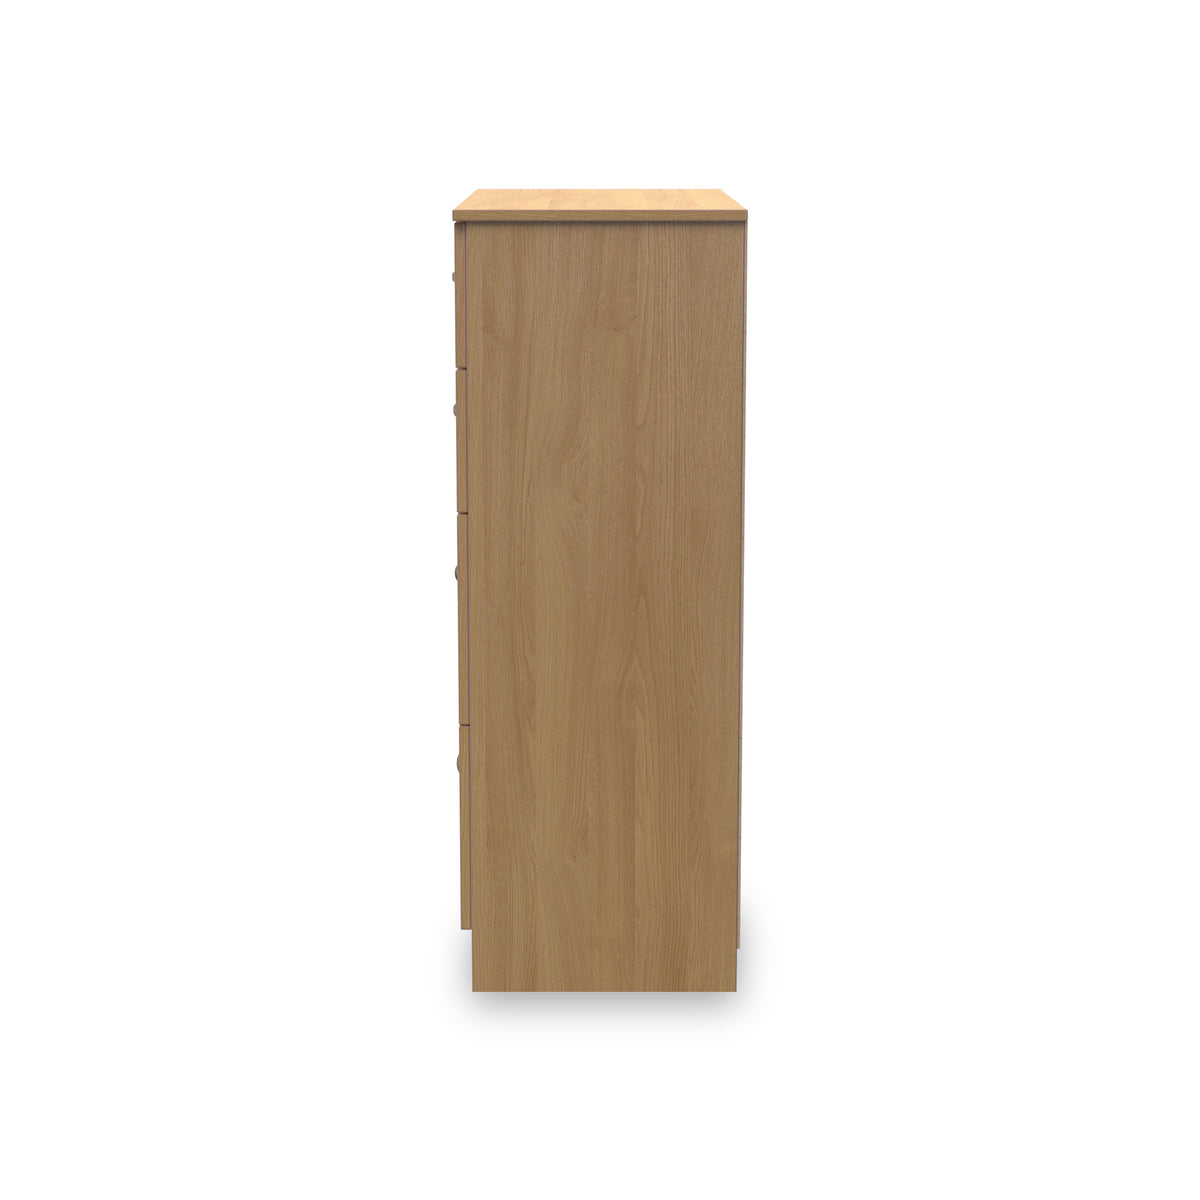 Kilgarth Modern Oak 4 Drawer Deep Chest by Roseland Furniture